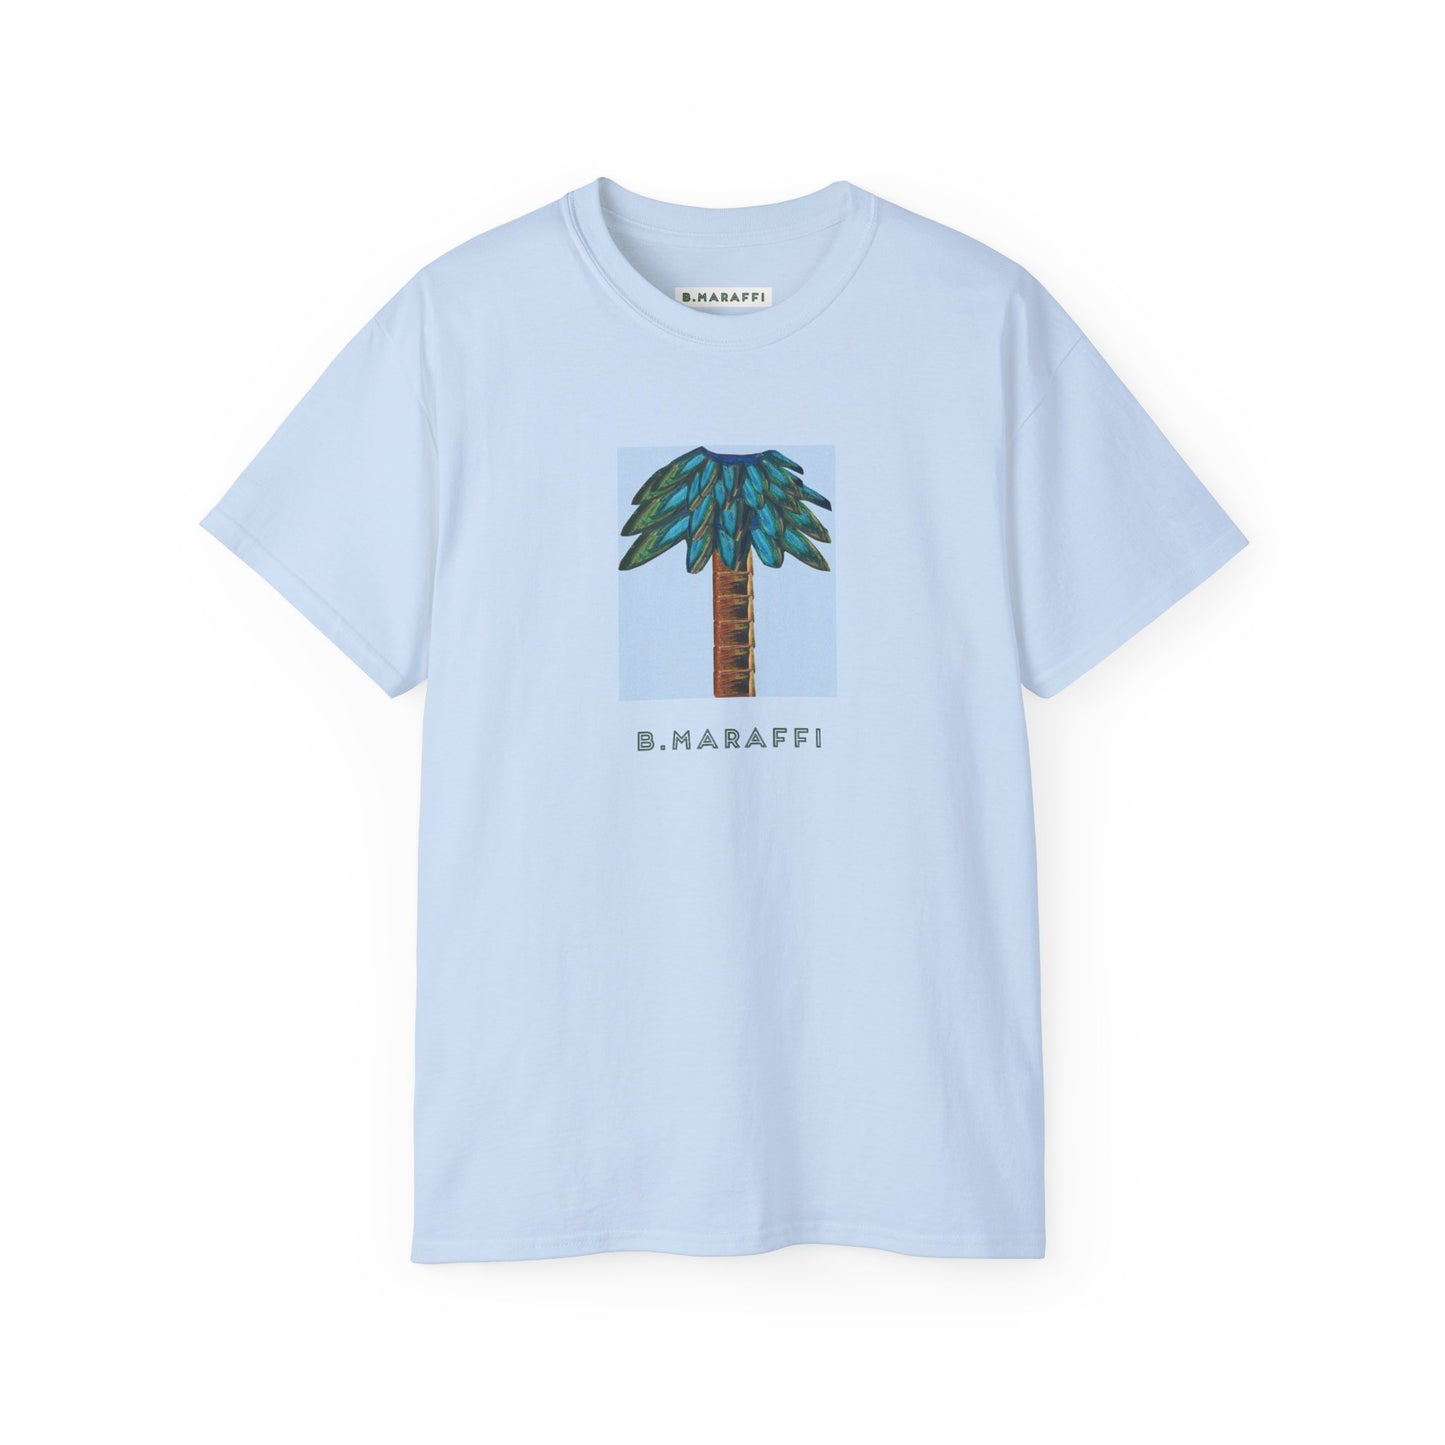 B.Maraffi Cotton T-shirt - Tiki Palm Sky